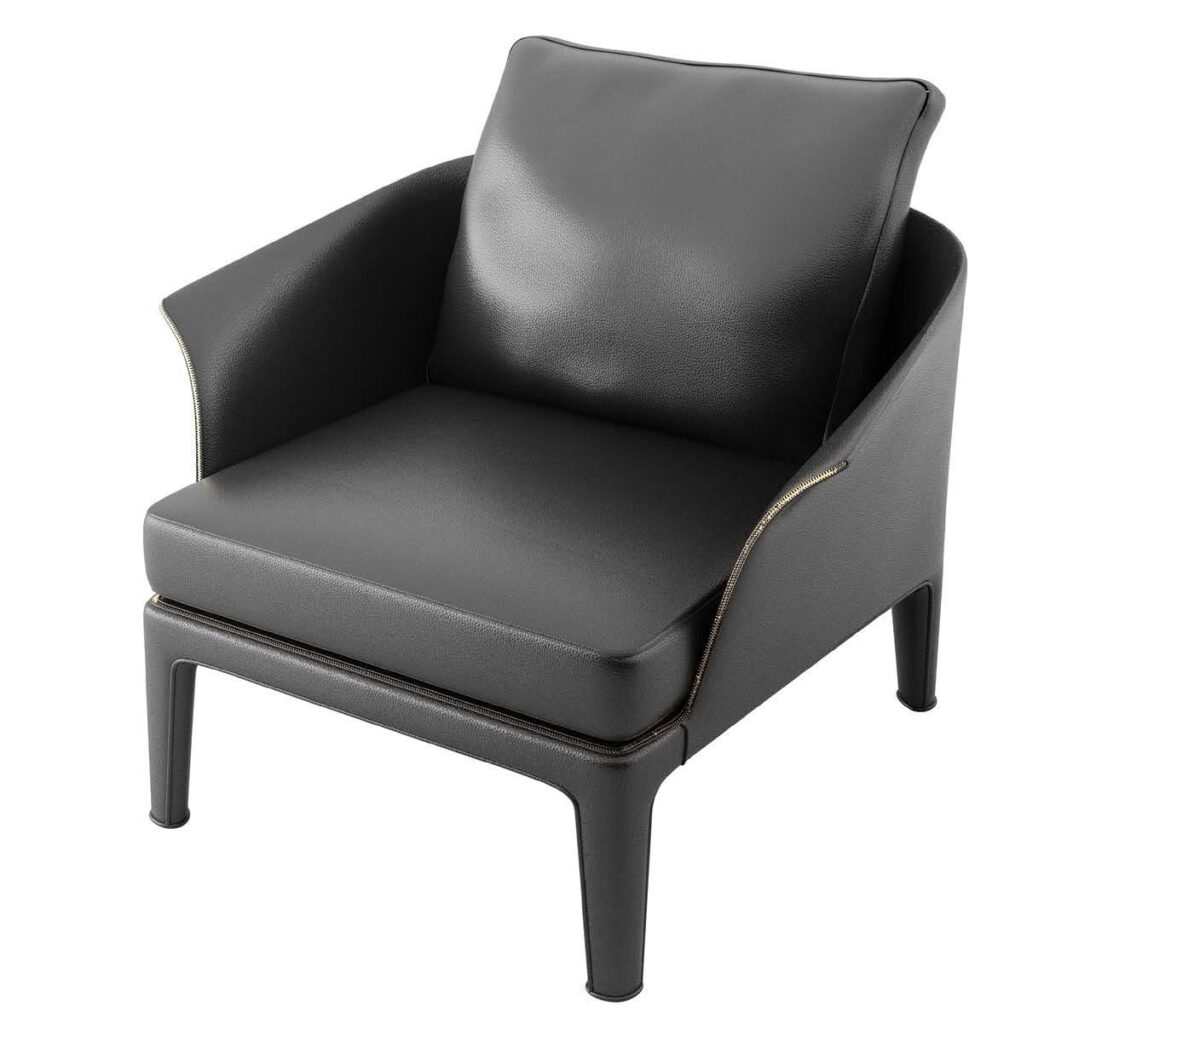 Versace Home Medusa trono armchair